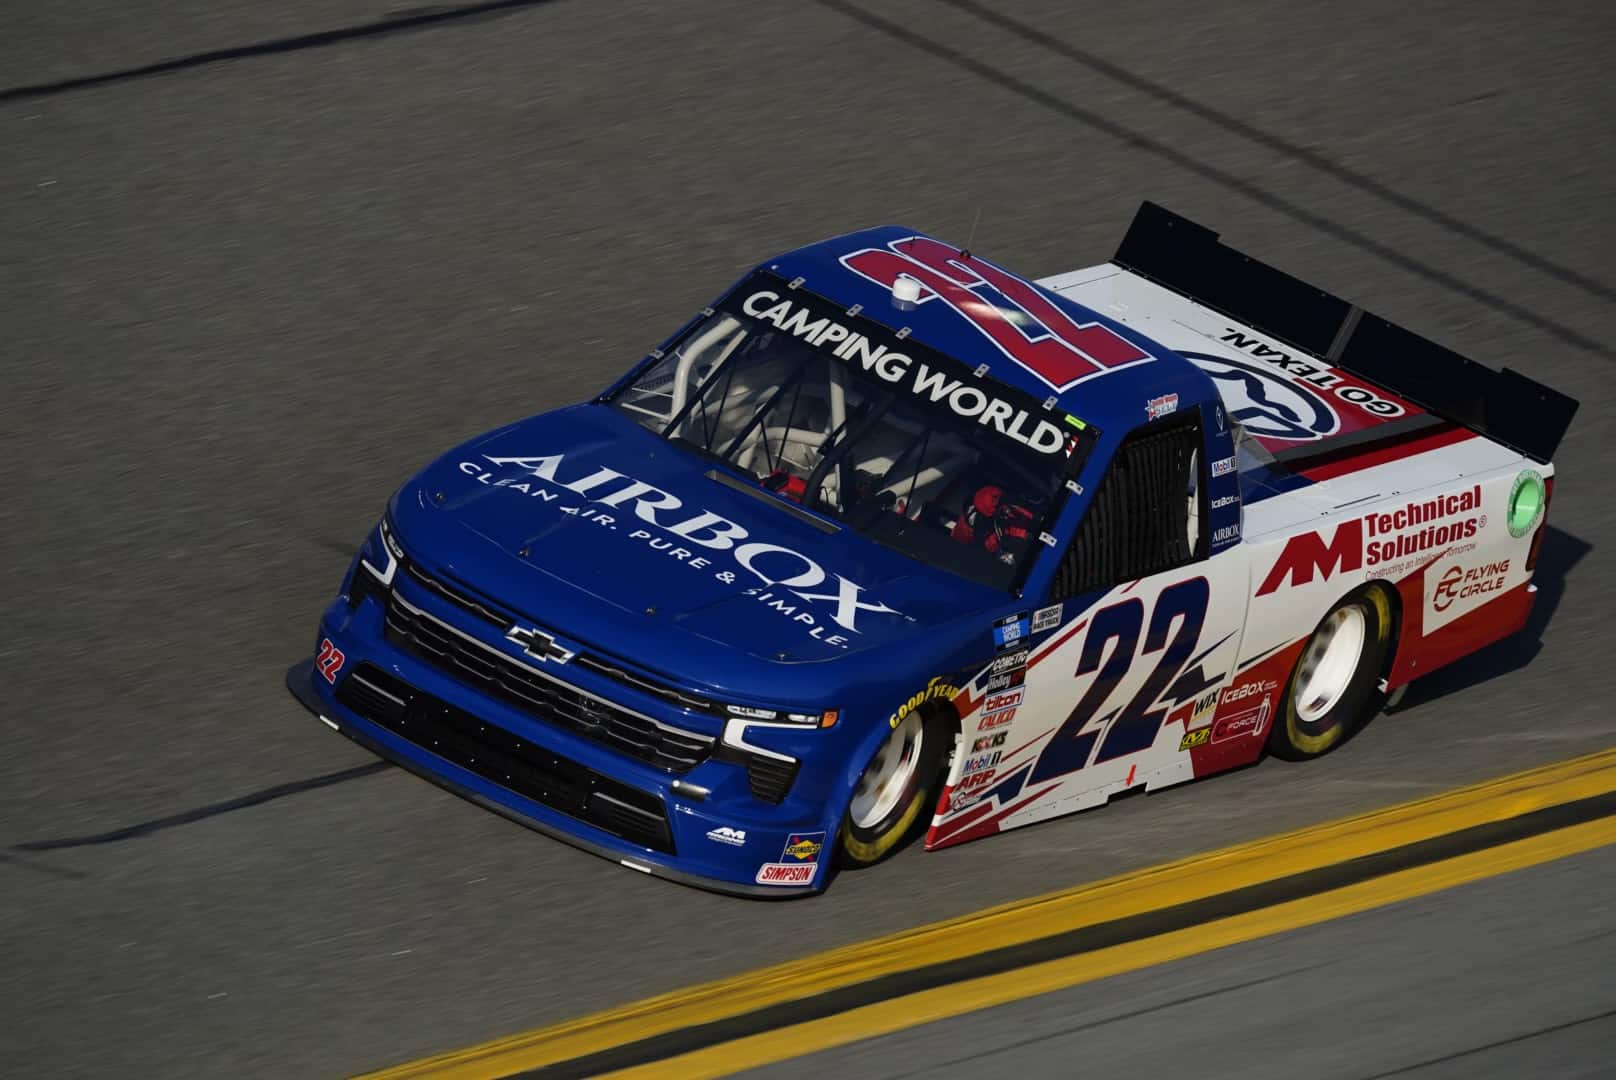 Austin Wayne Self pilots the No. 22 truck at Daytona to start the 2022 NASCAR season.